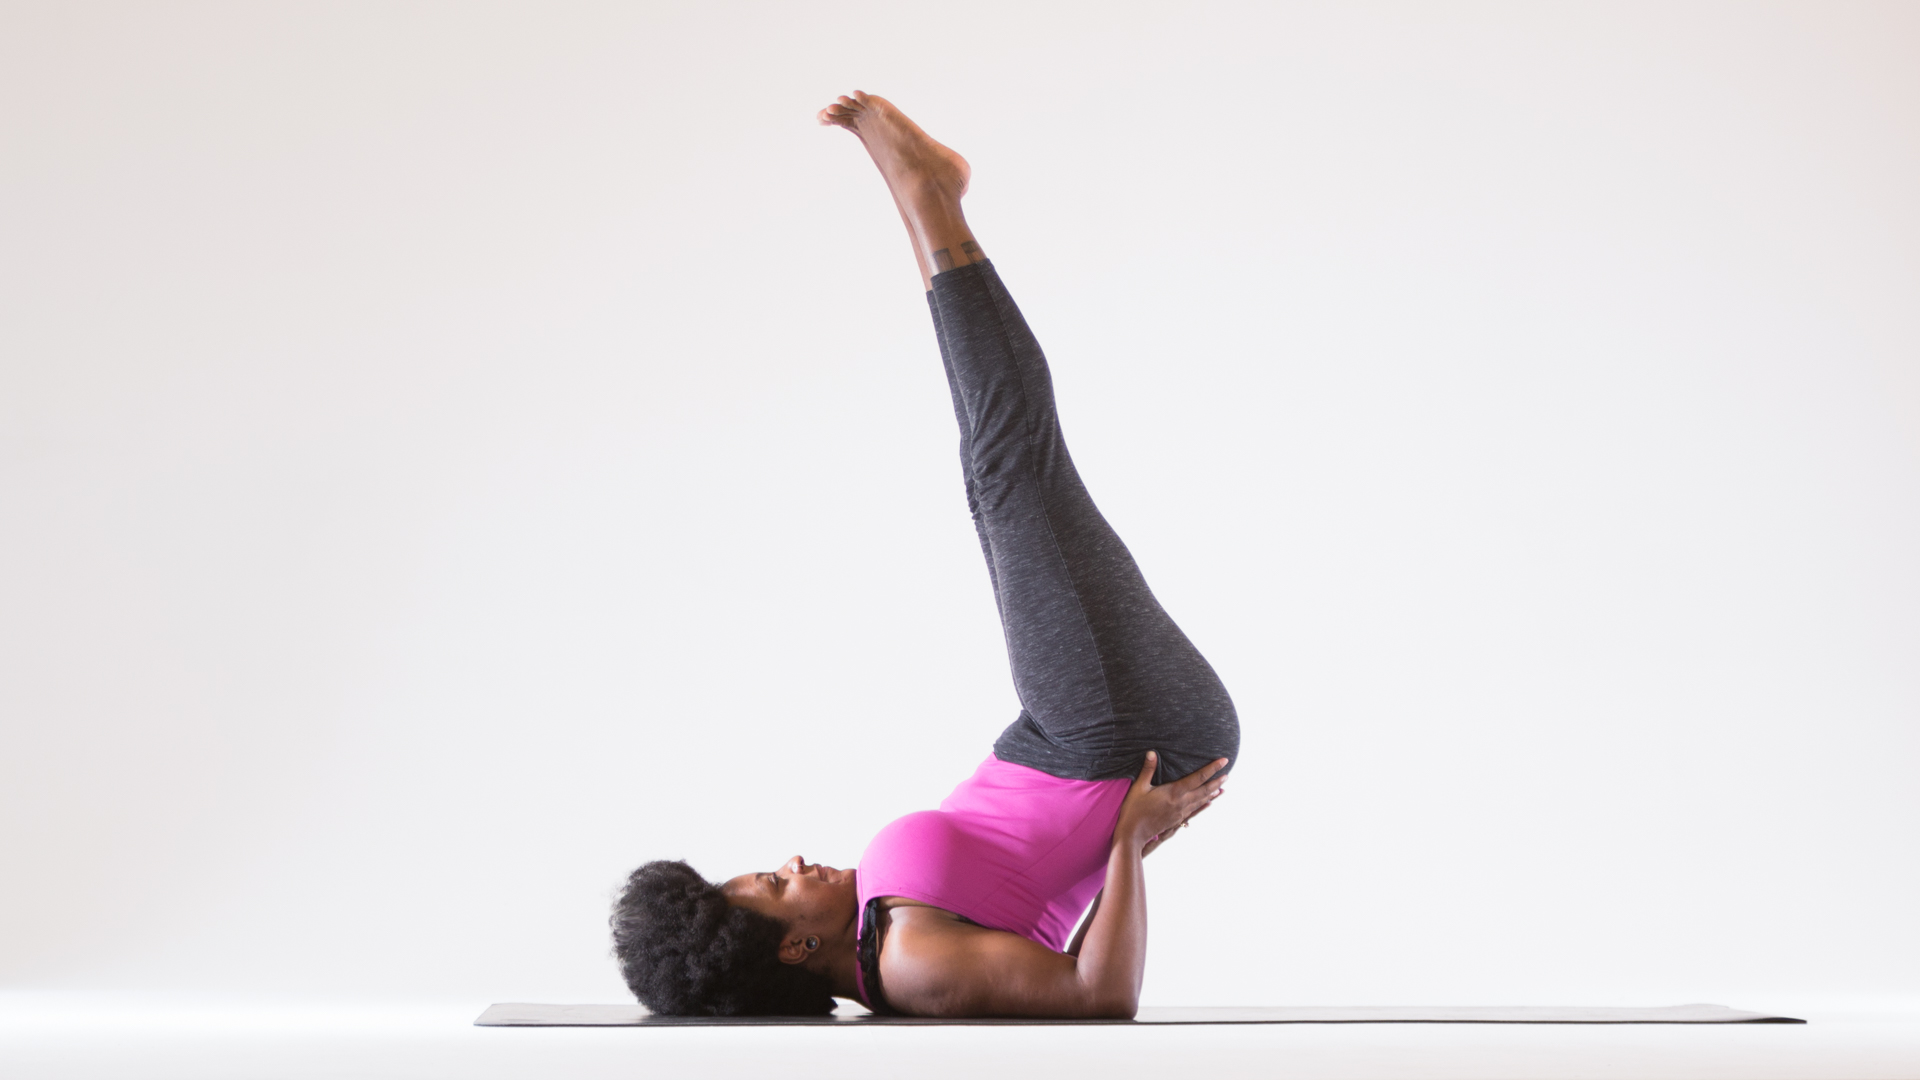 Viparitakarani - Inverted pose - The Yoga Institute